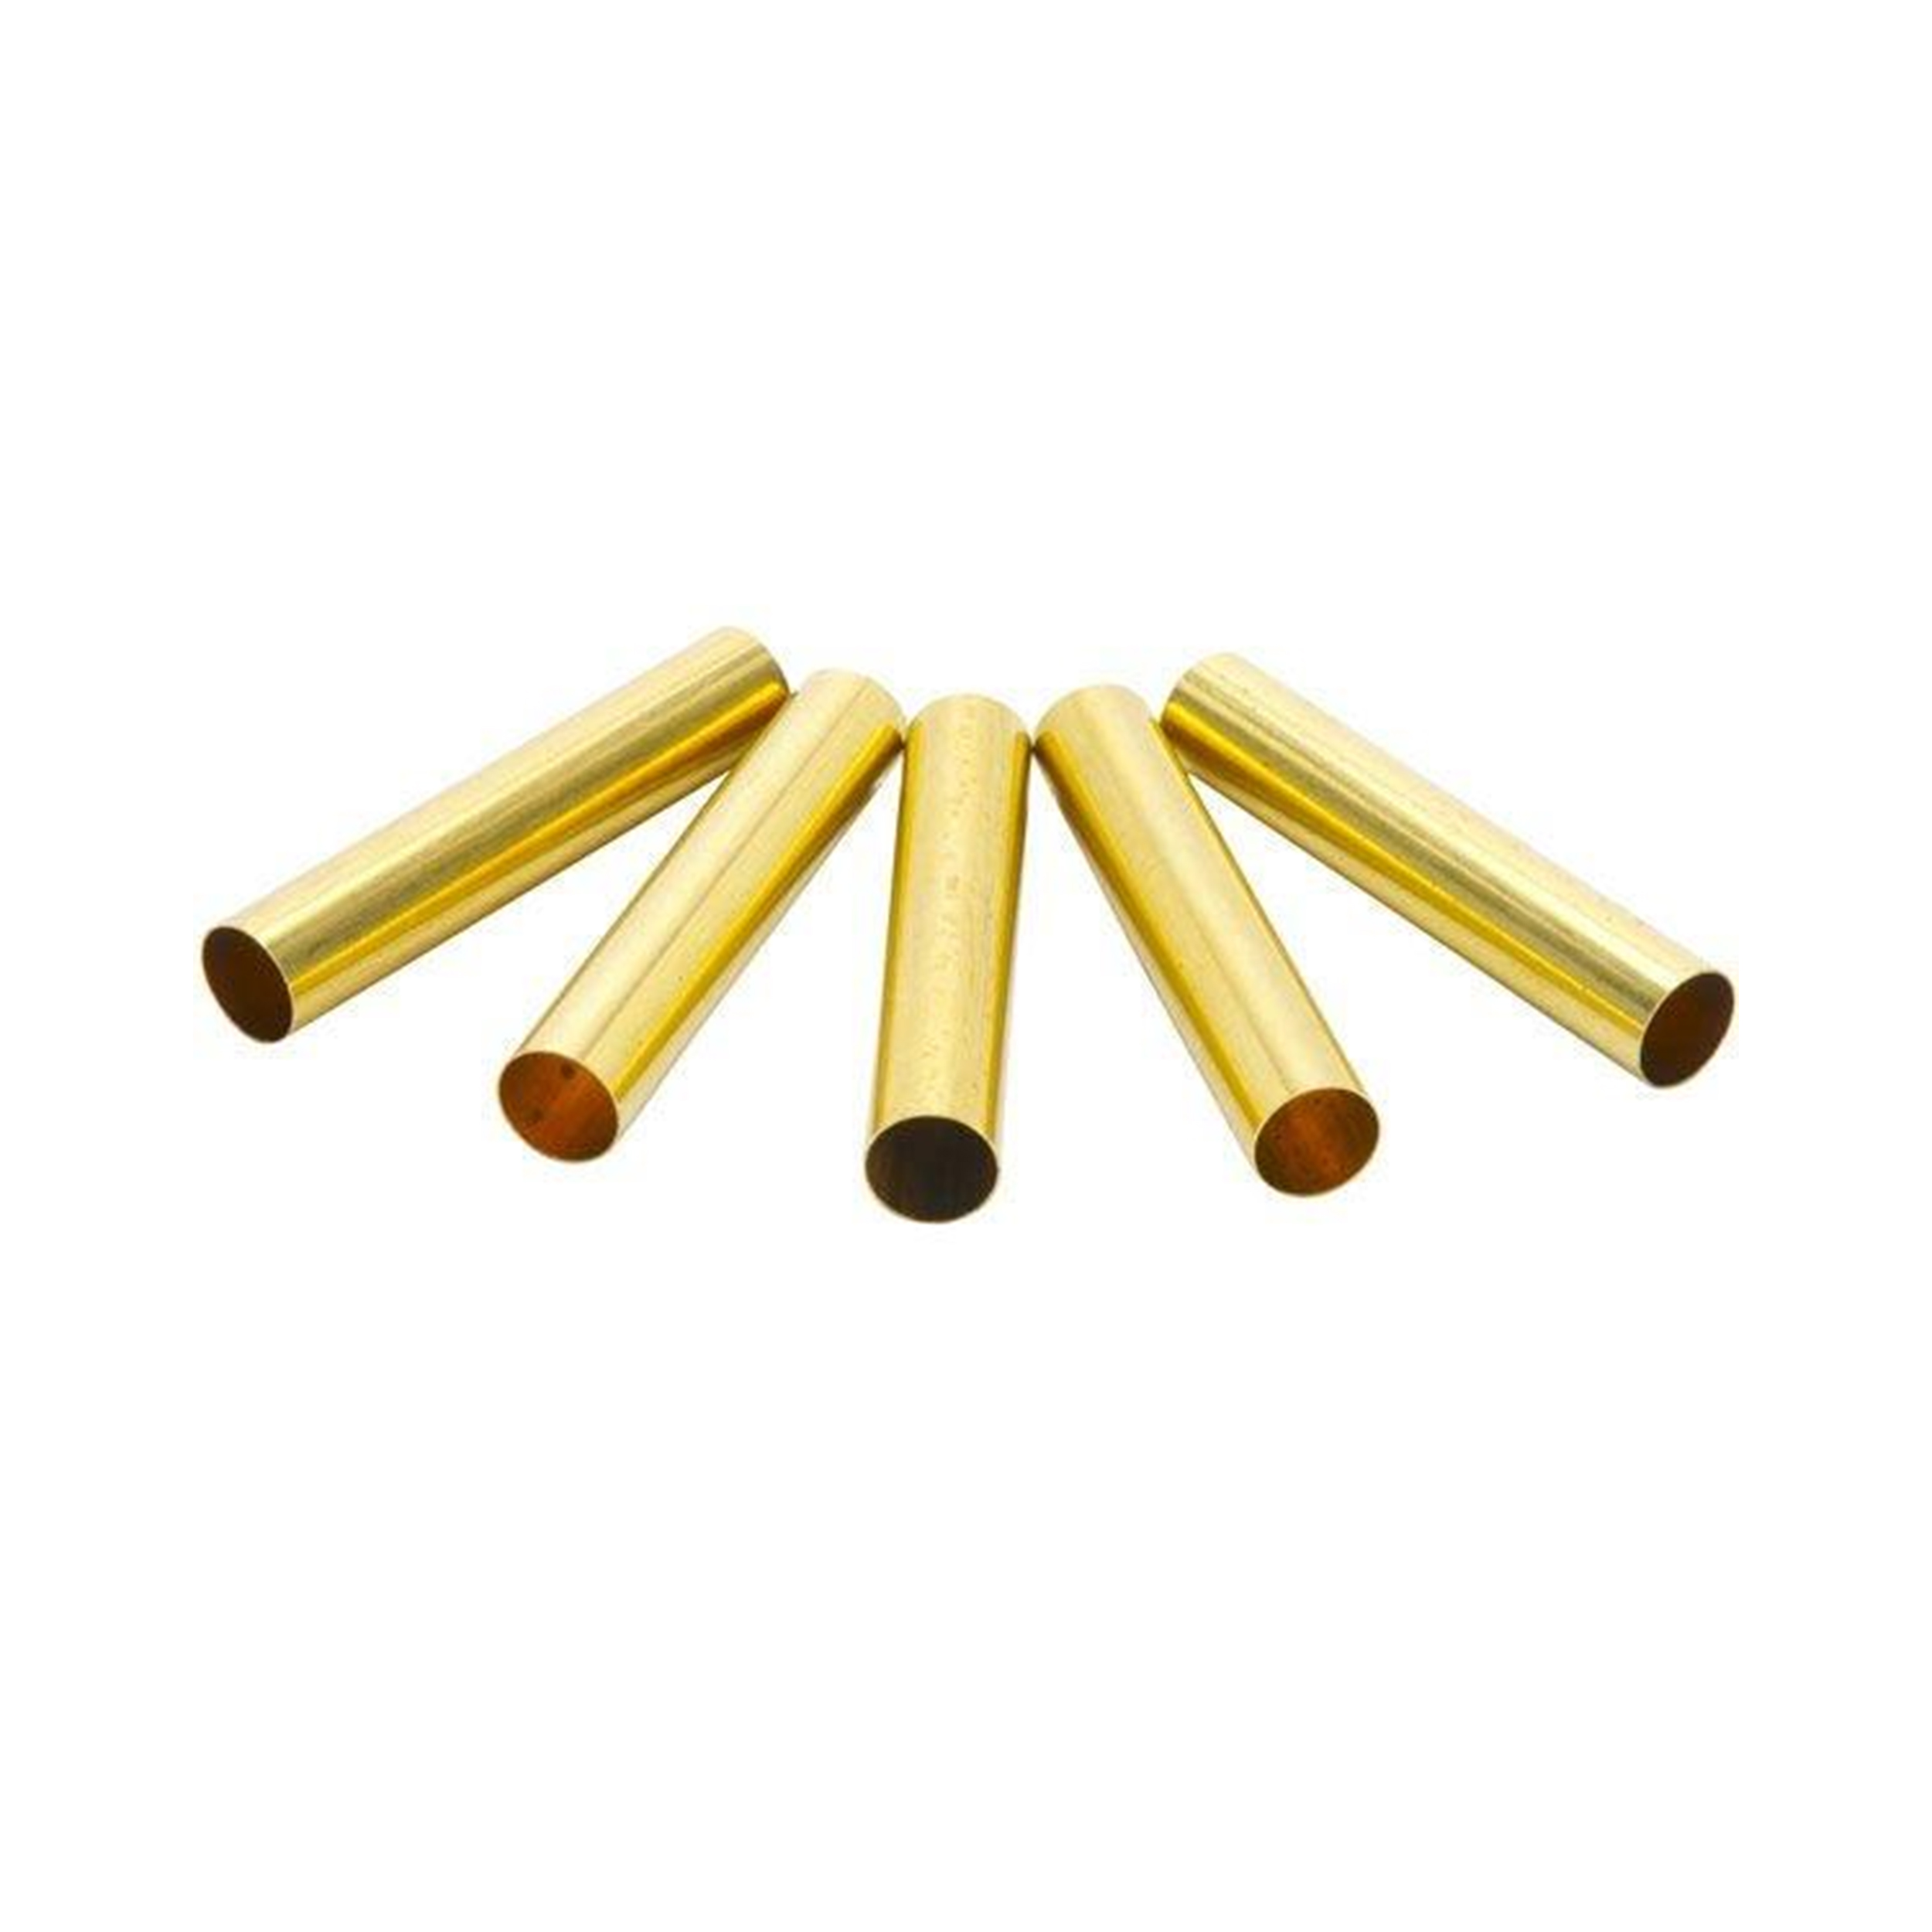 Replacement Tubes For .45 Caliber Bullet Pen Kit